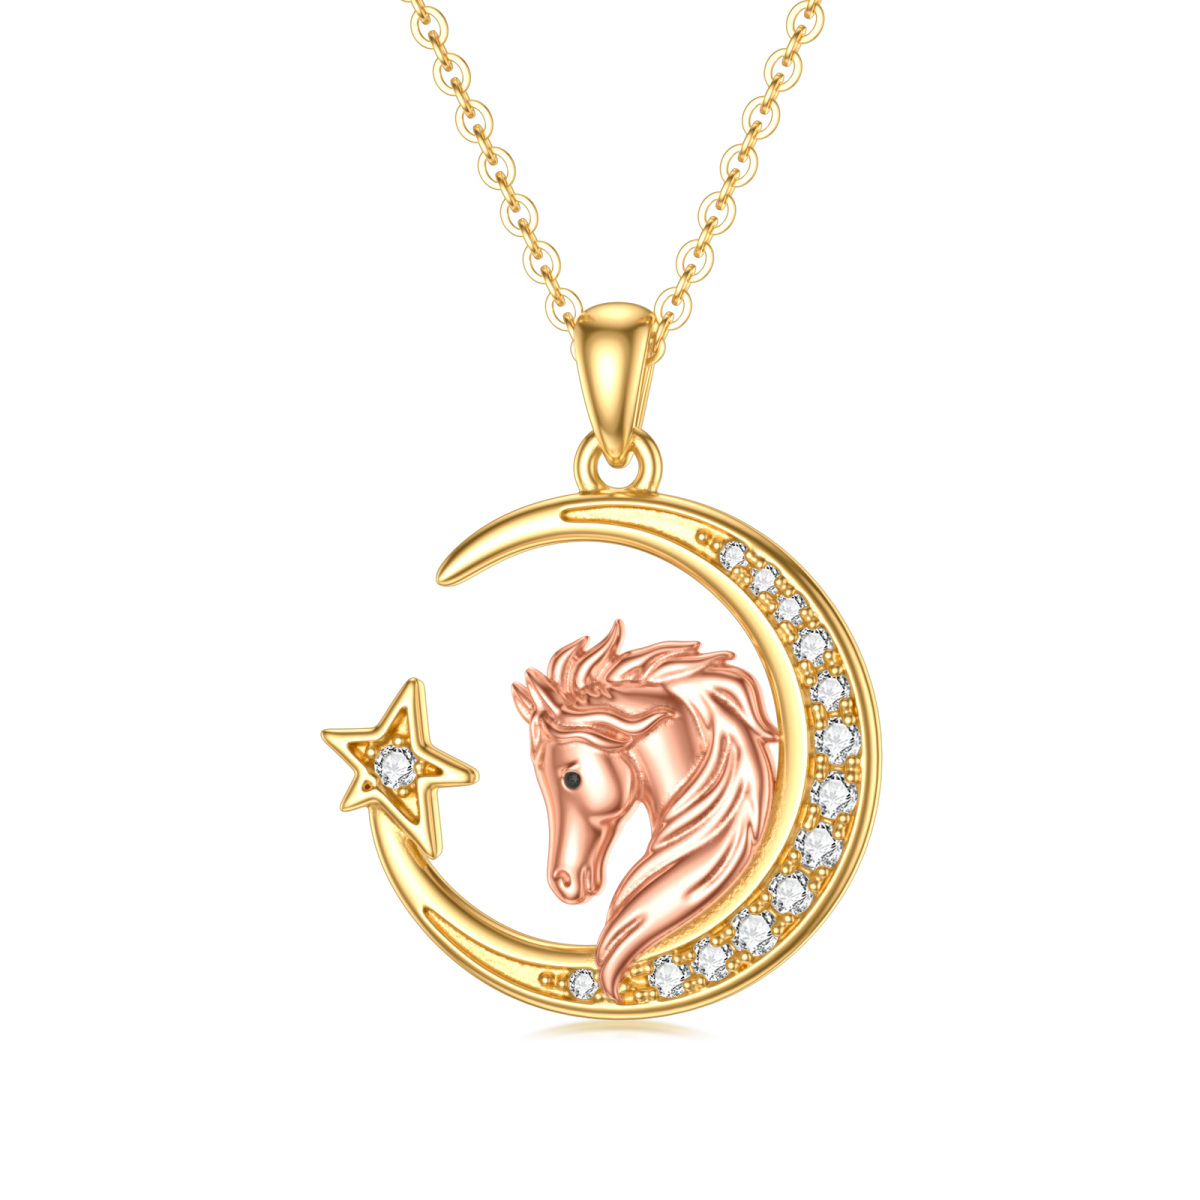 Collar colgante de oro de 14 quilates y oro rosa con moissanita redonda, caballo, luna y e-1